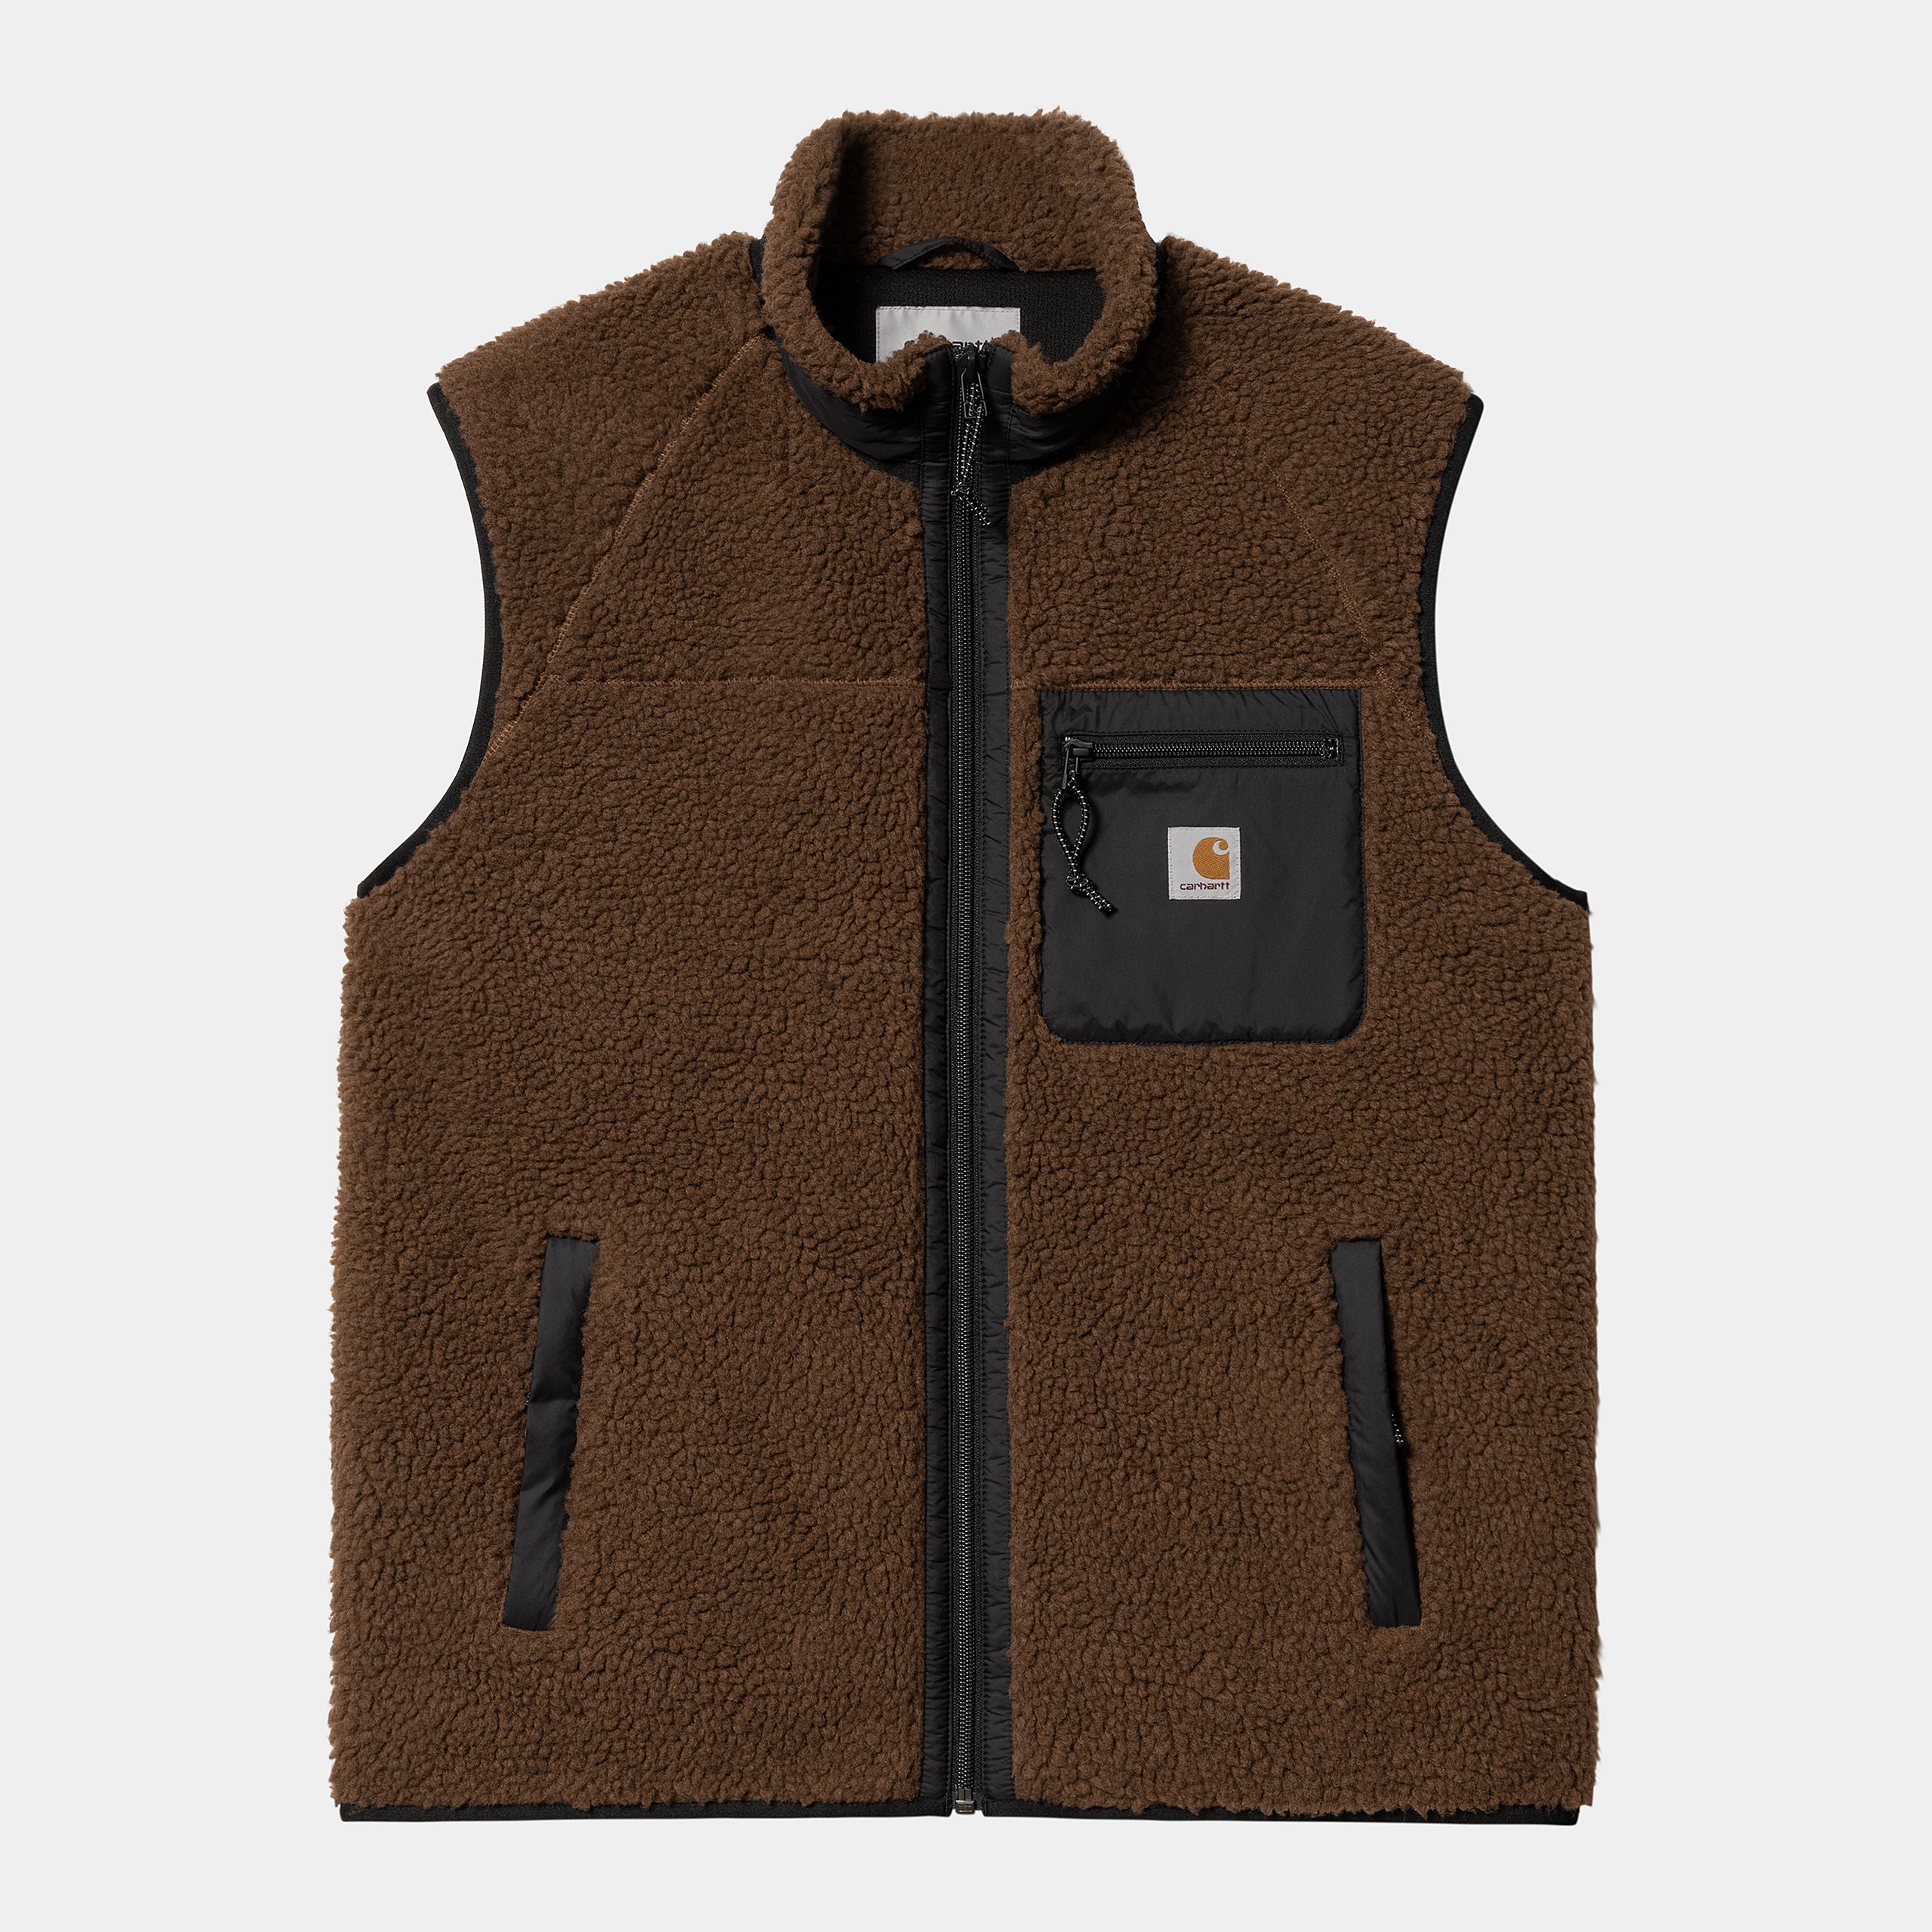 Men's Prentis Vest Liner-Deep H Brown / Black-Front View